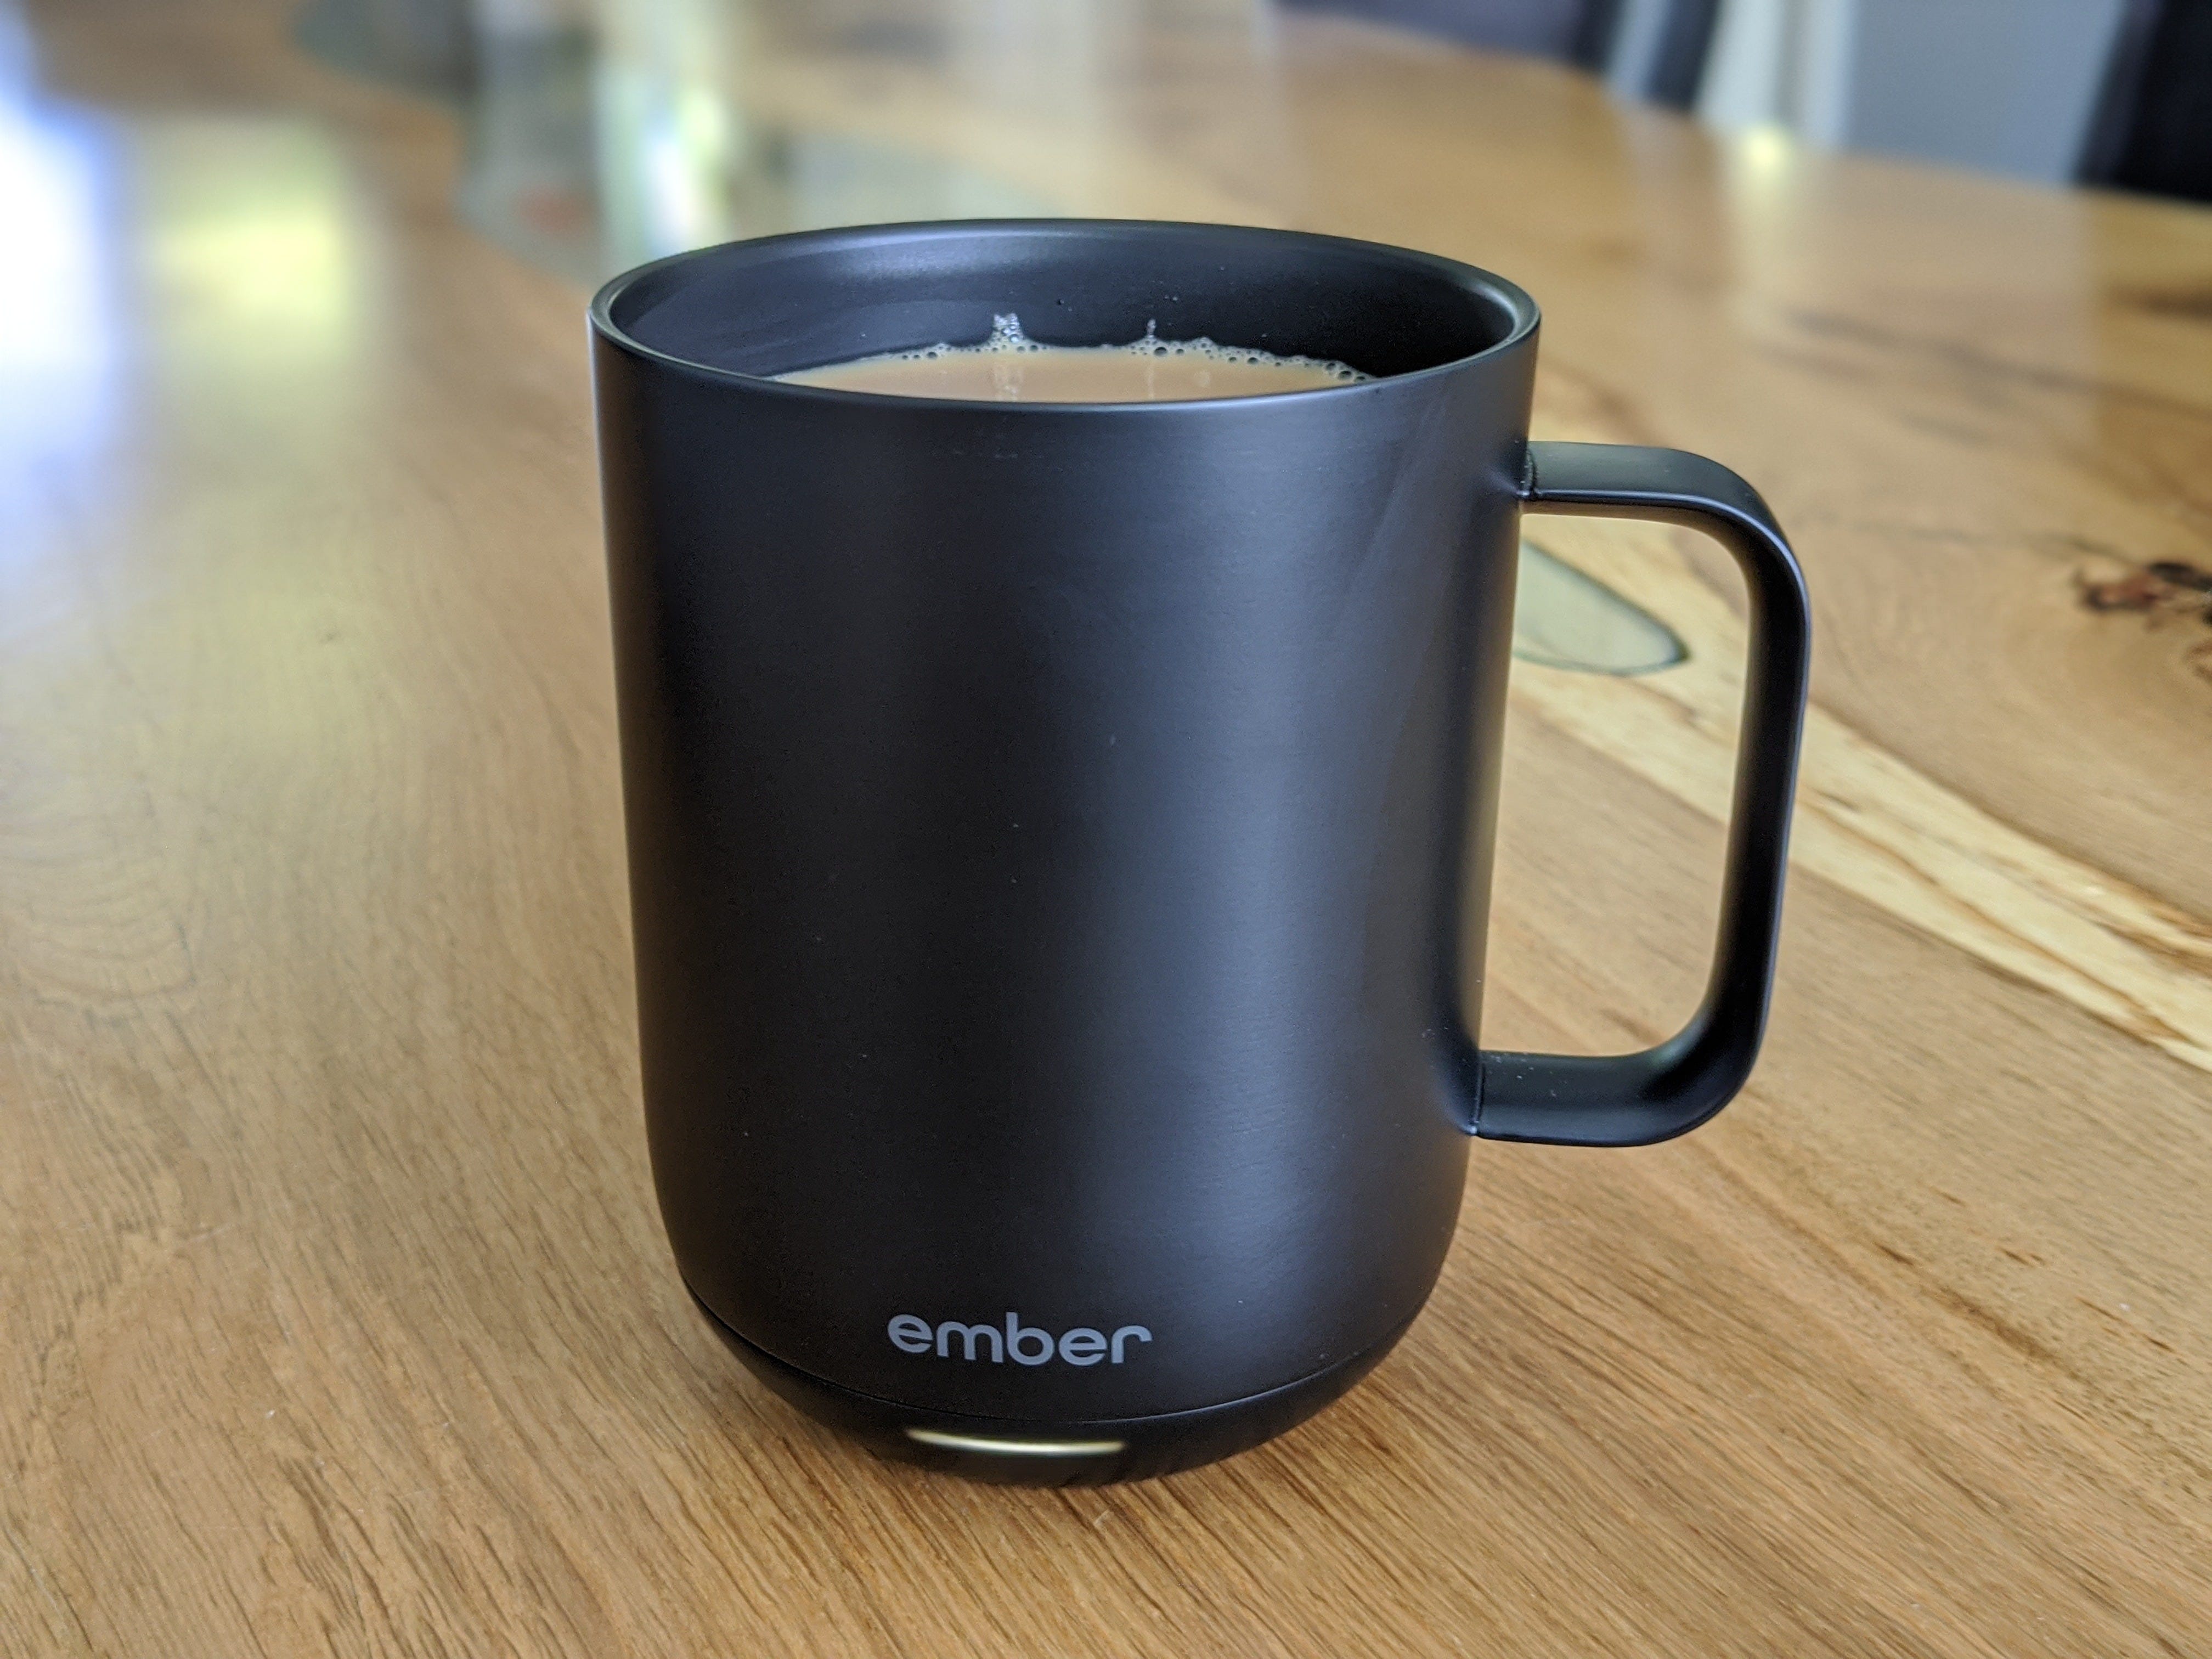 Der Ember Mug 2 gefüllt mit Kaffee.